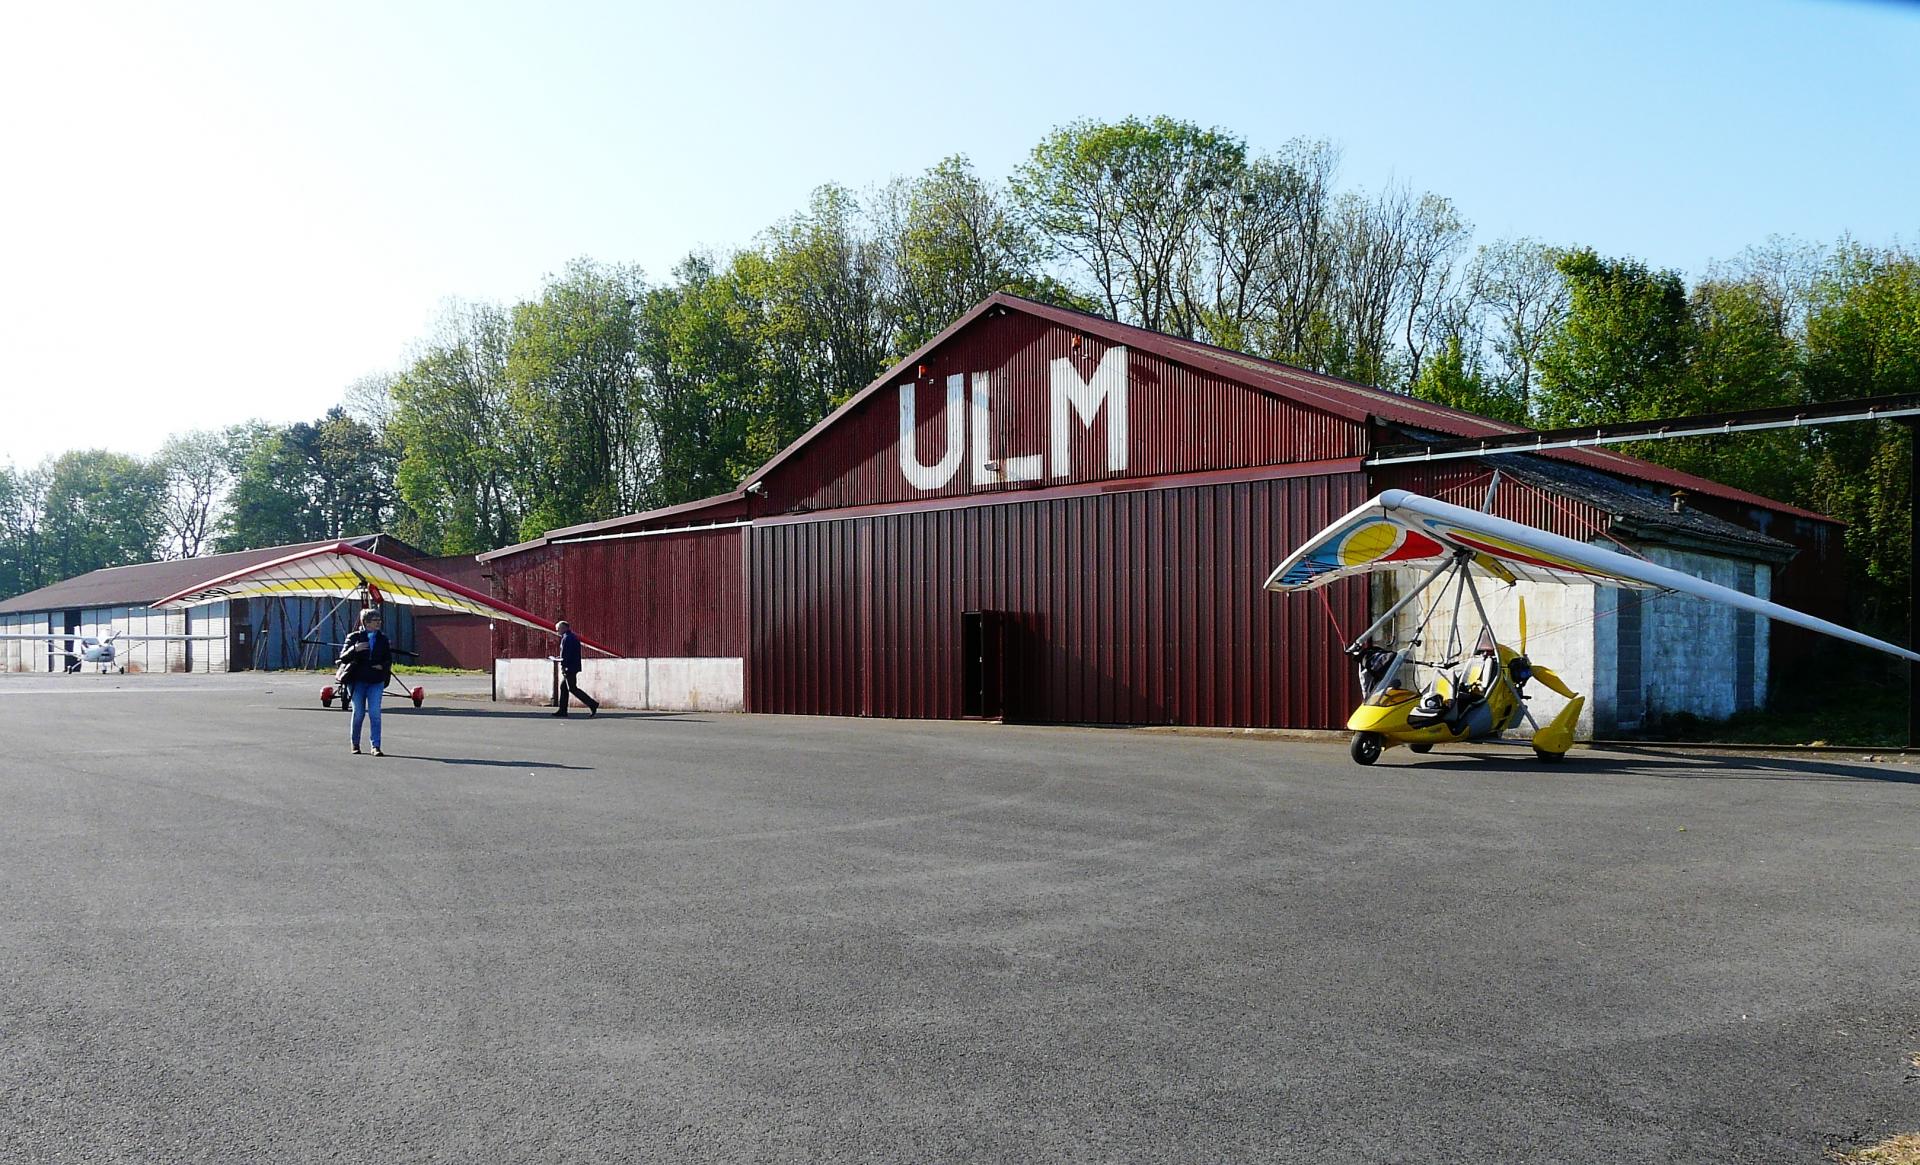 Hangar ULM